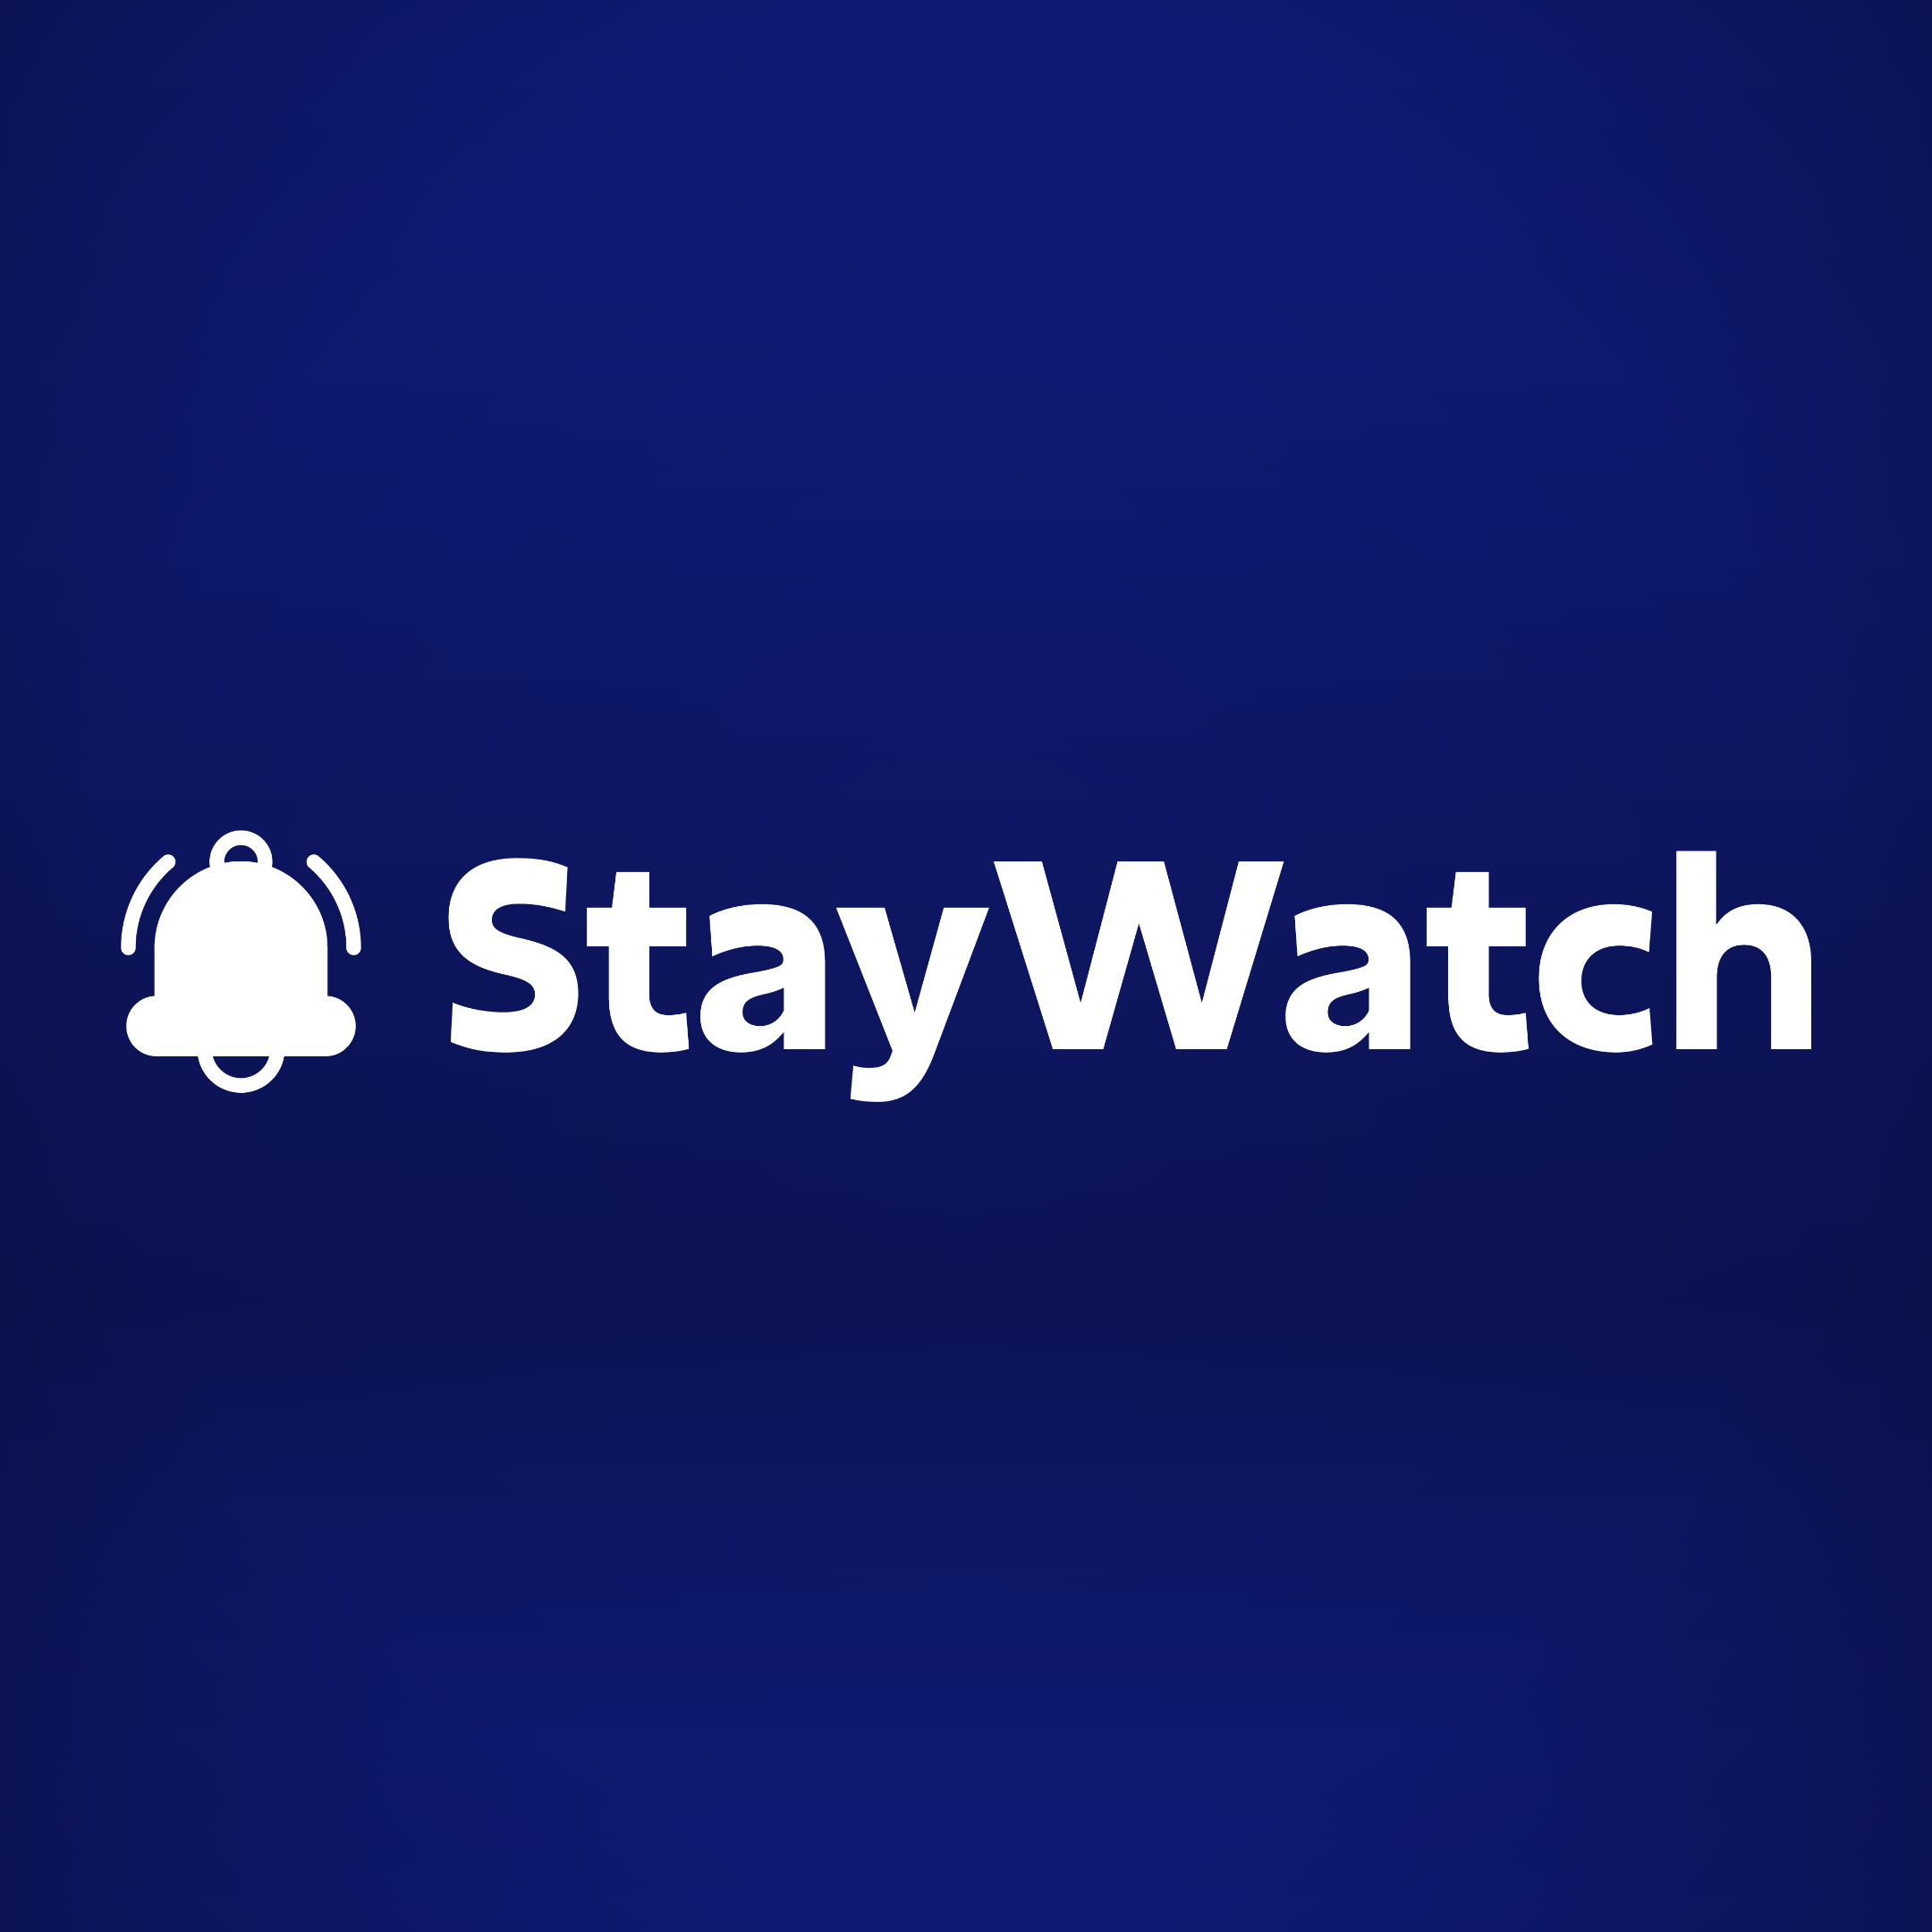 StayWatch logo